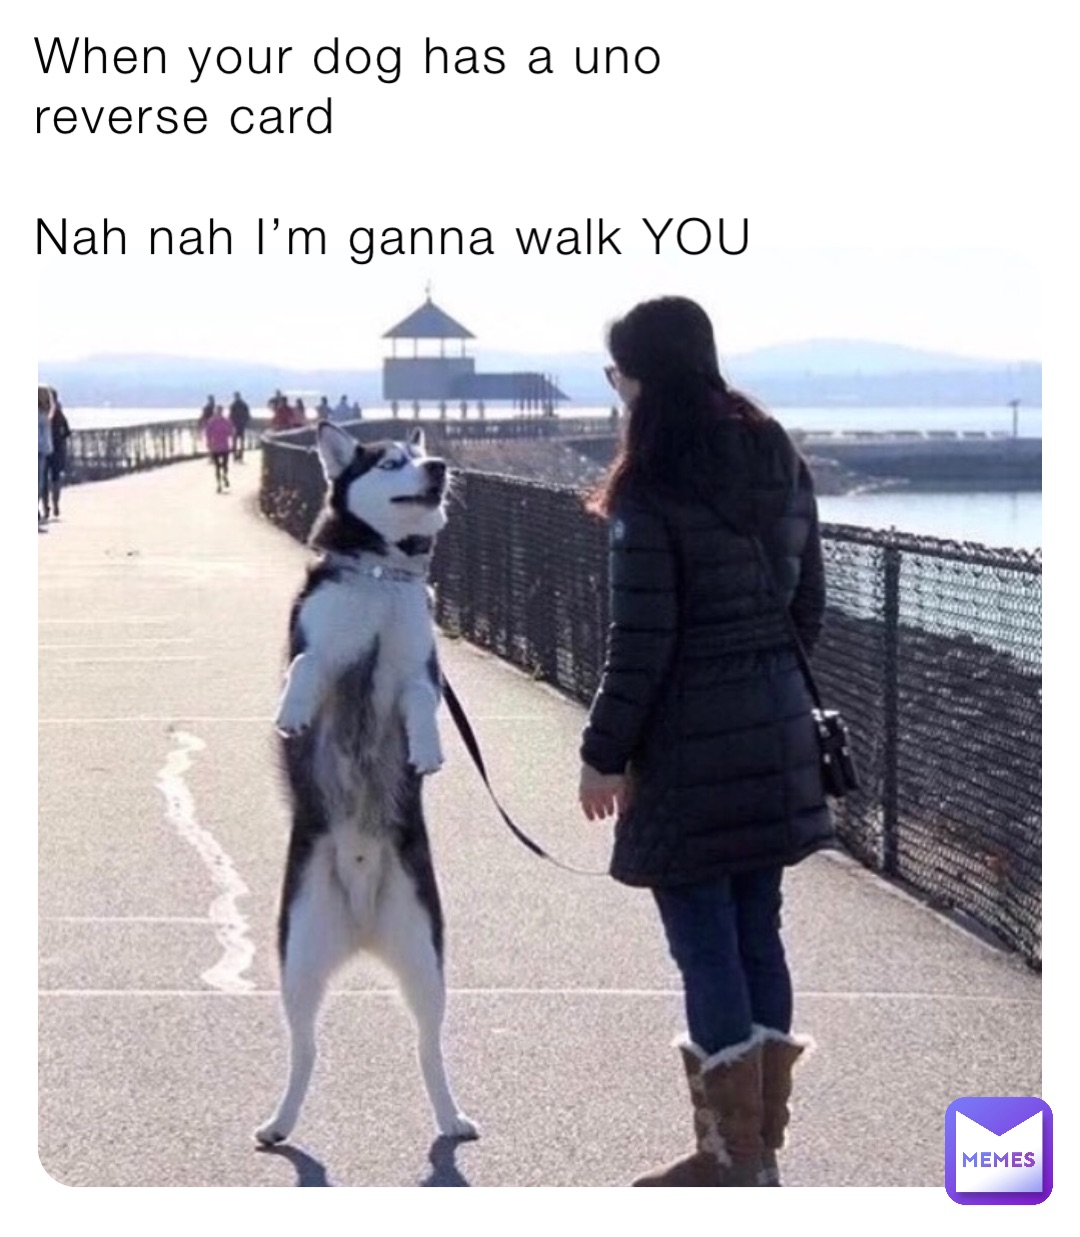 When your dog has a uno reverse card

Nah nah I’m ganna walk YOU